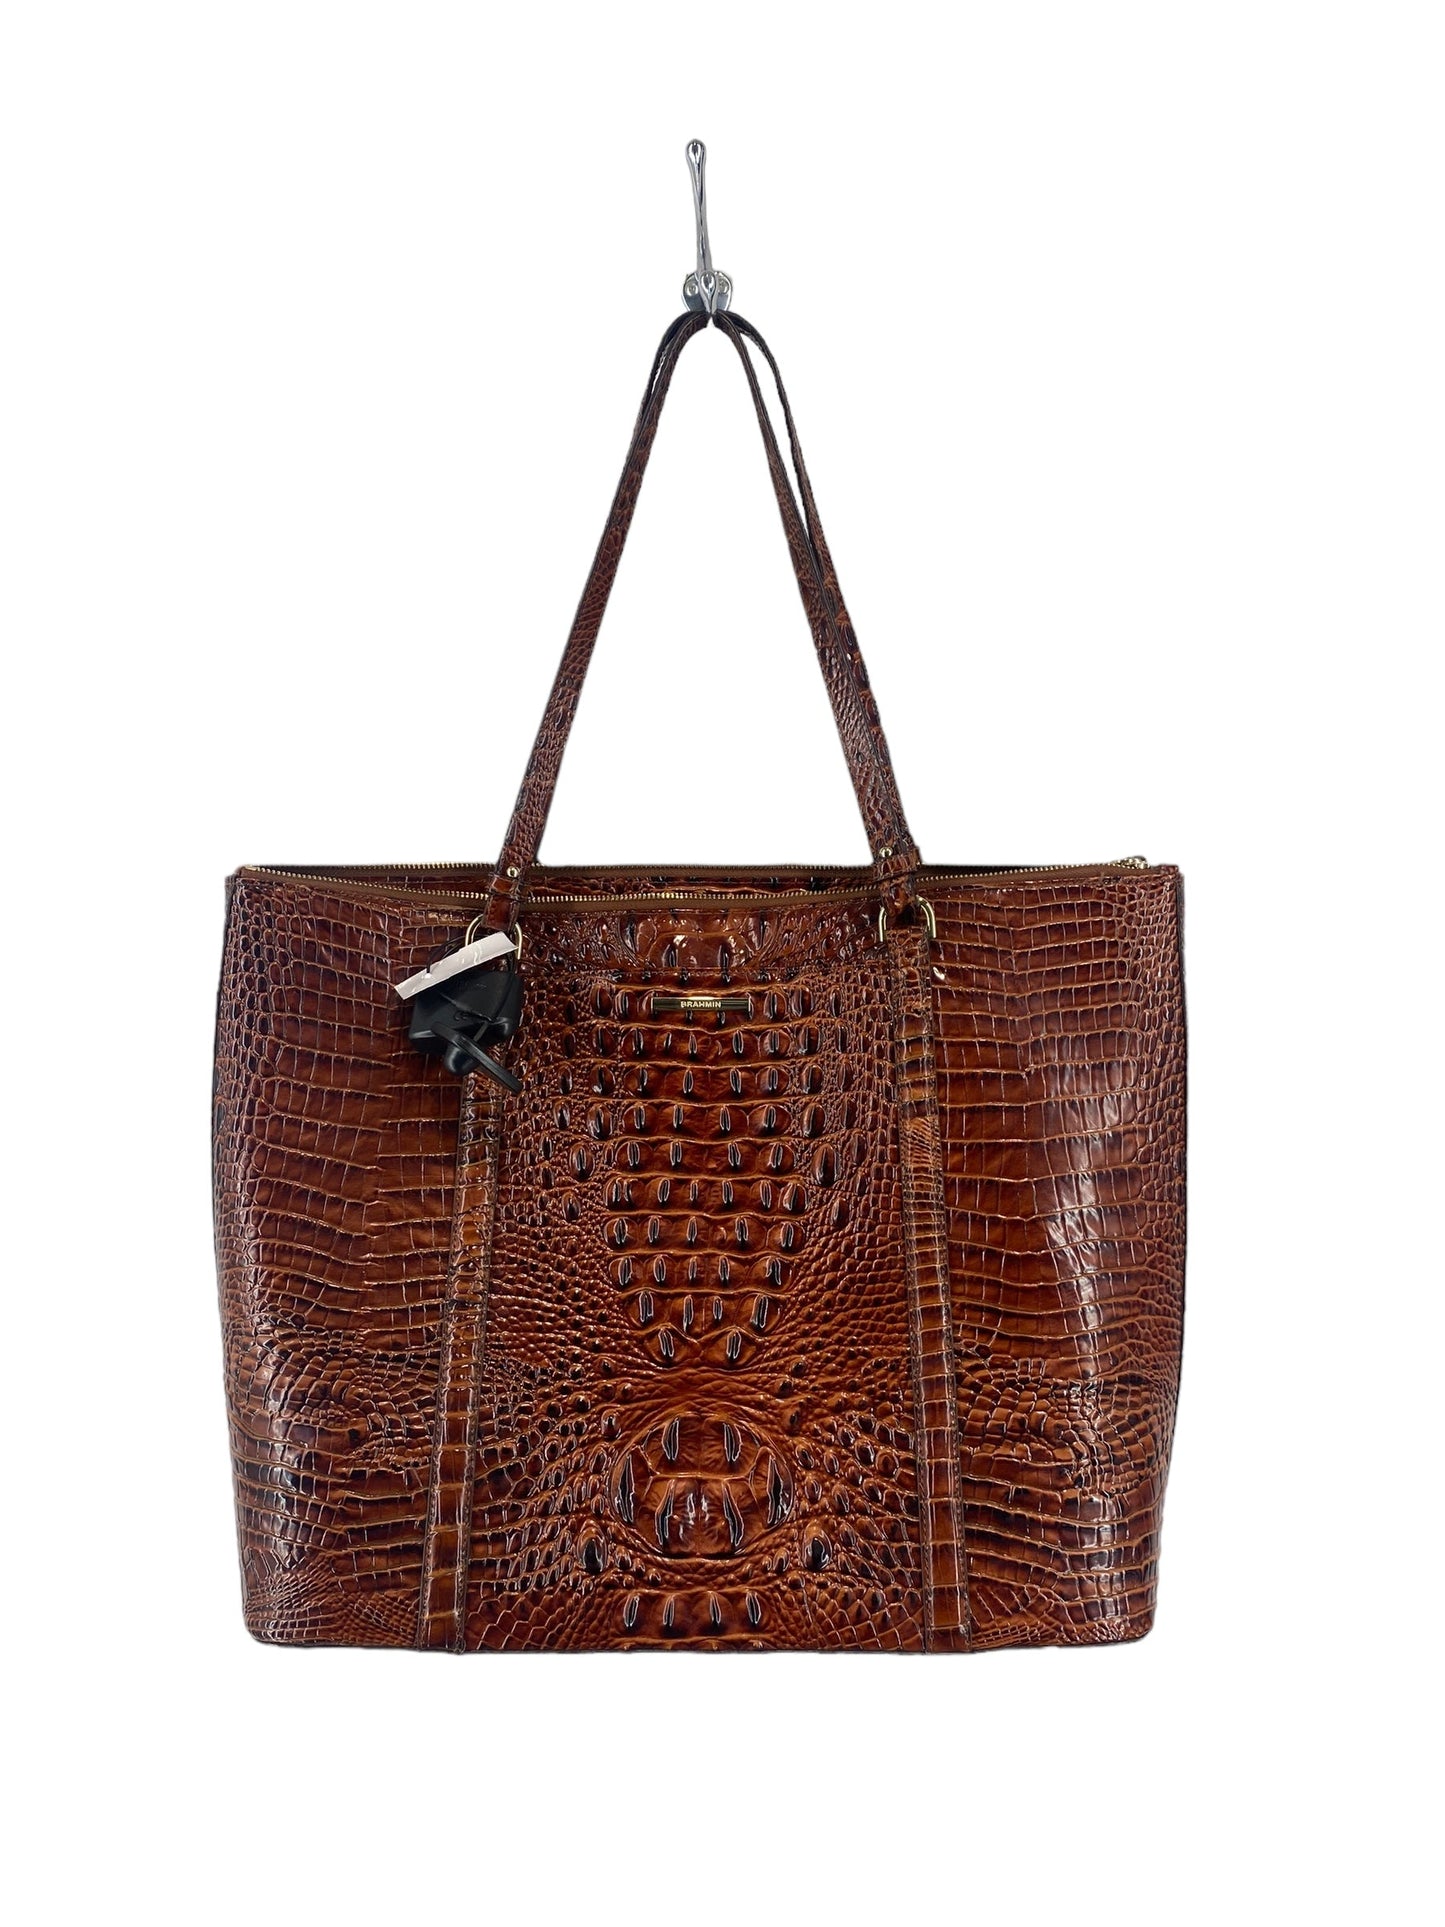 Handbag Leather Brahmin, Size Large